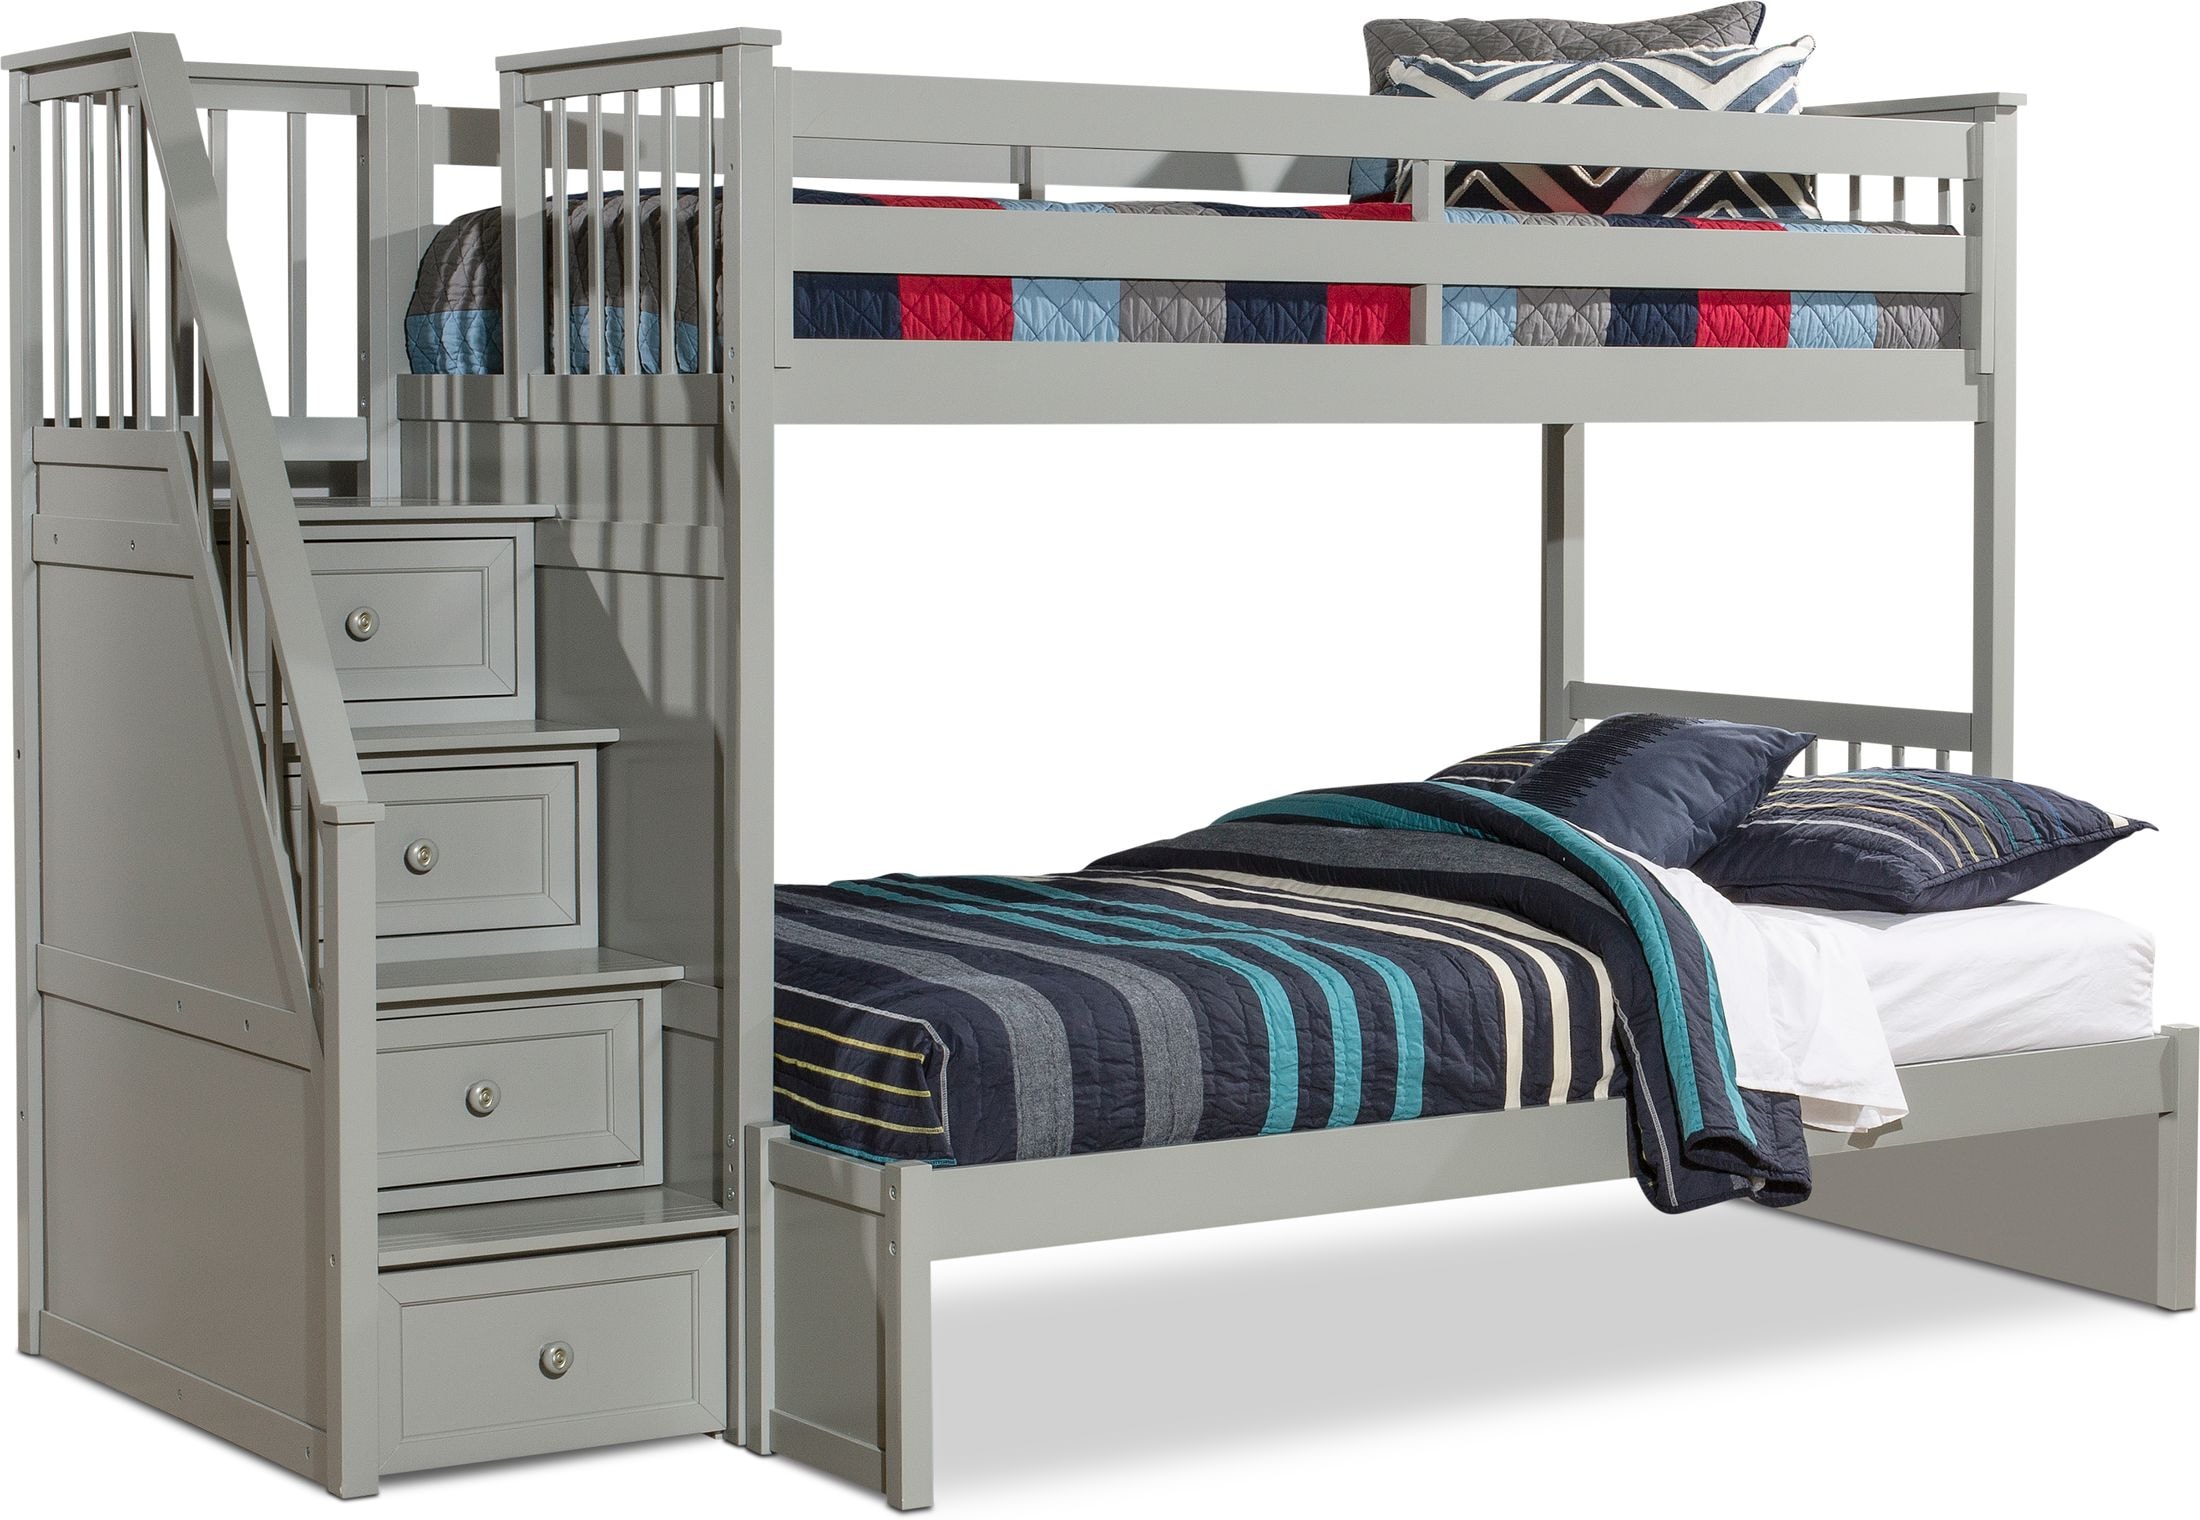 value city bunk beds